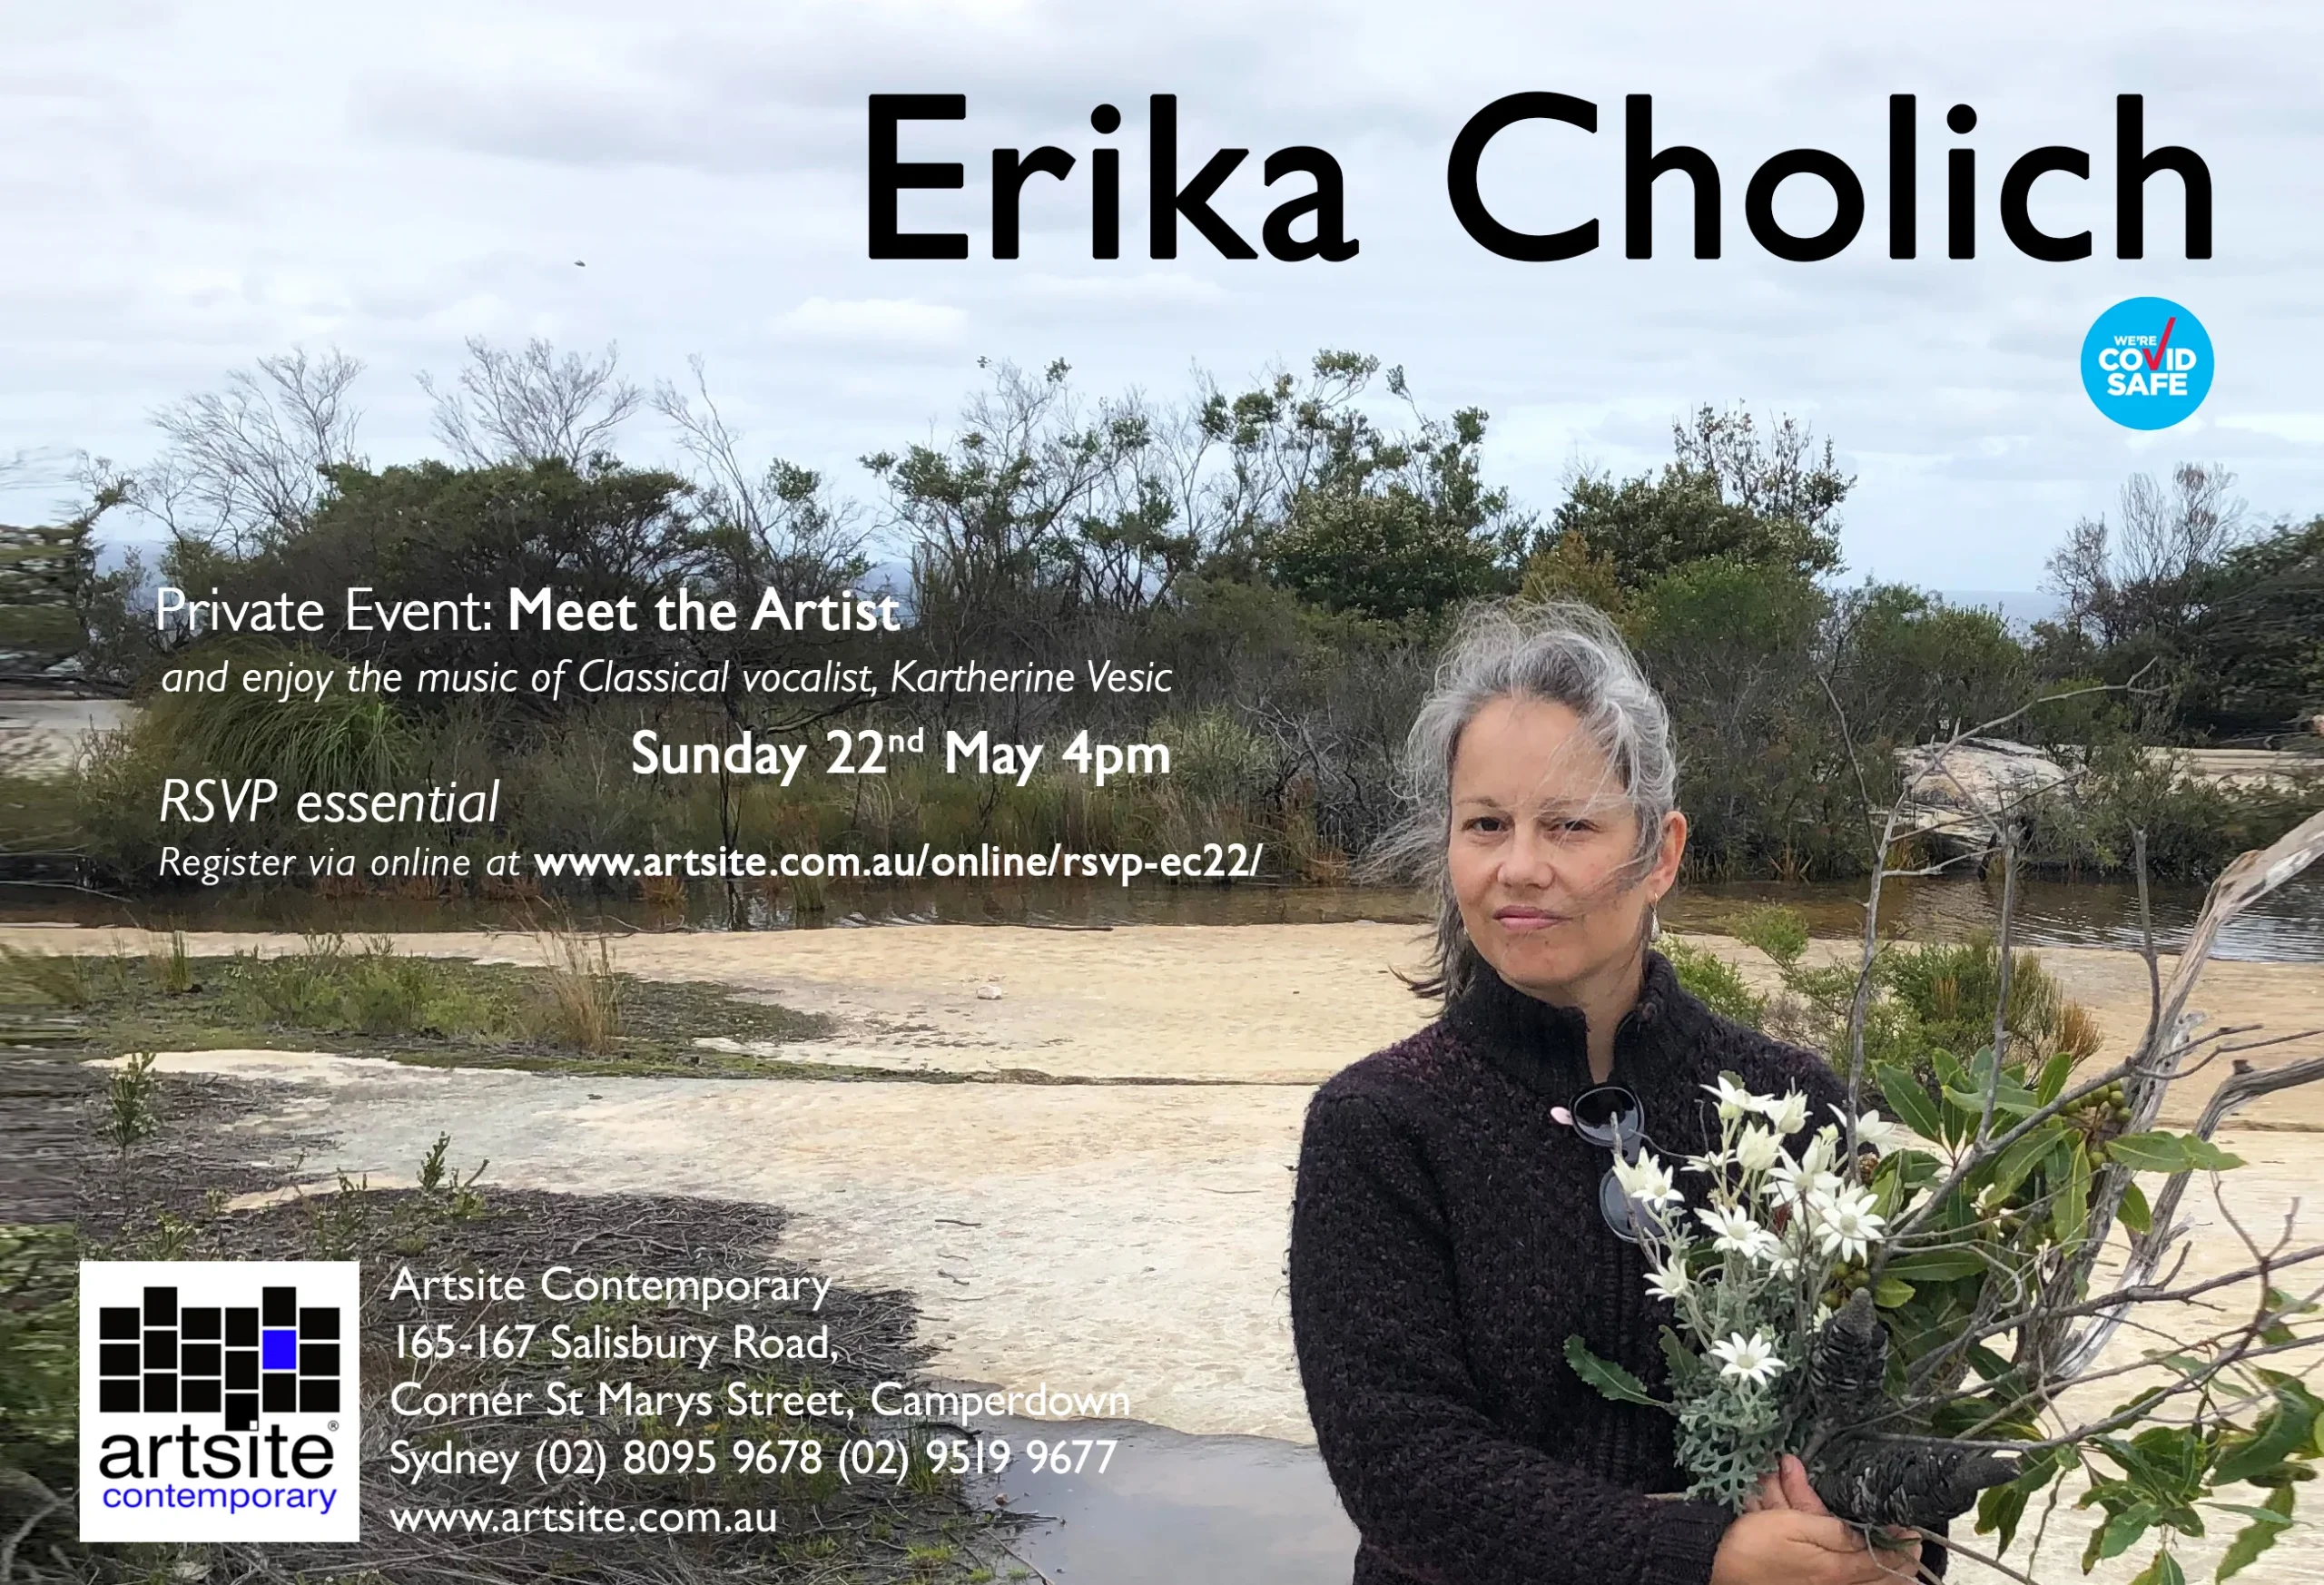 Erika Cholich - Solo Exhibition | 21 May - 12 June 2022 | Artsite Contemporary, Sydney, Australia.